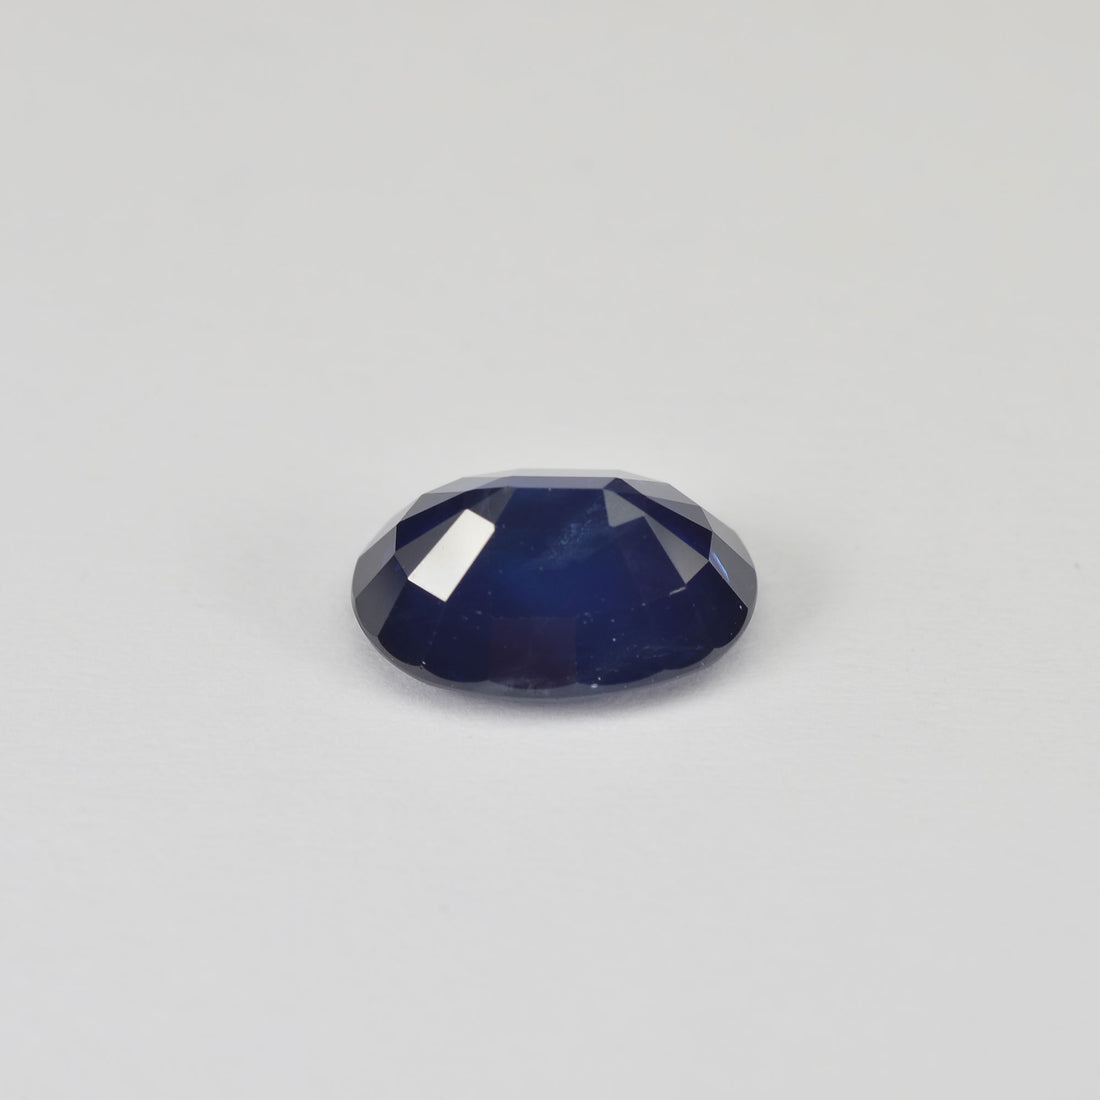 2.40 cts Natural Blue Sapphire Loose Gemstone Oval Cut - Thai Gems Export Ltd.